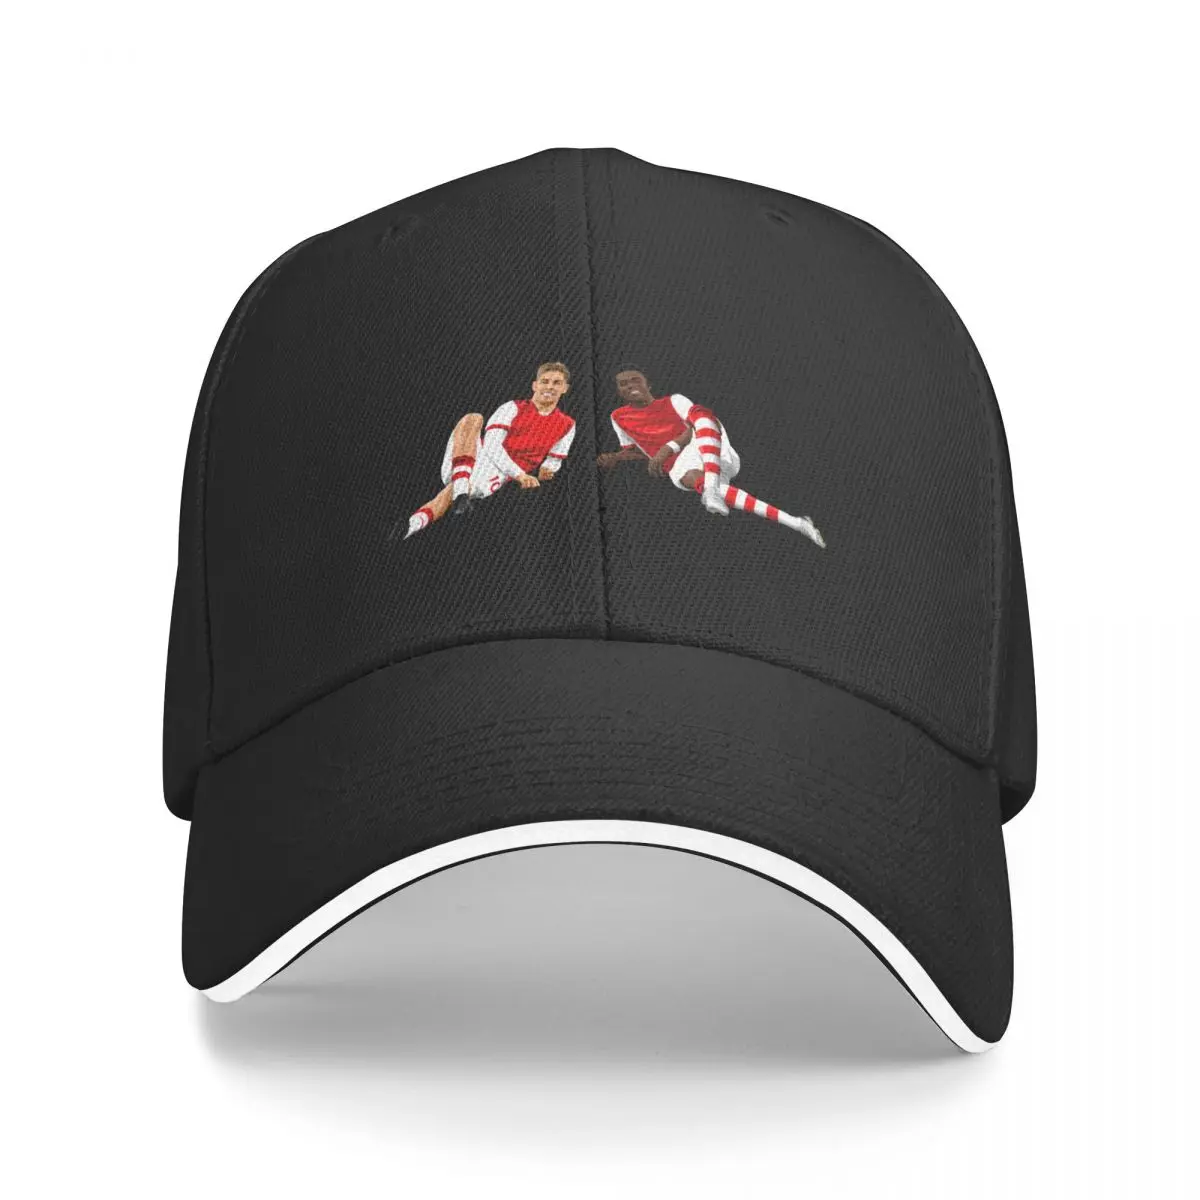 

Saka and Smith Rowe AFC Baseball Cap Hat Luxury Brand Visor Thermal Visor Ladies Men's